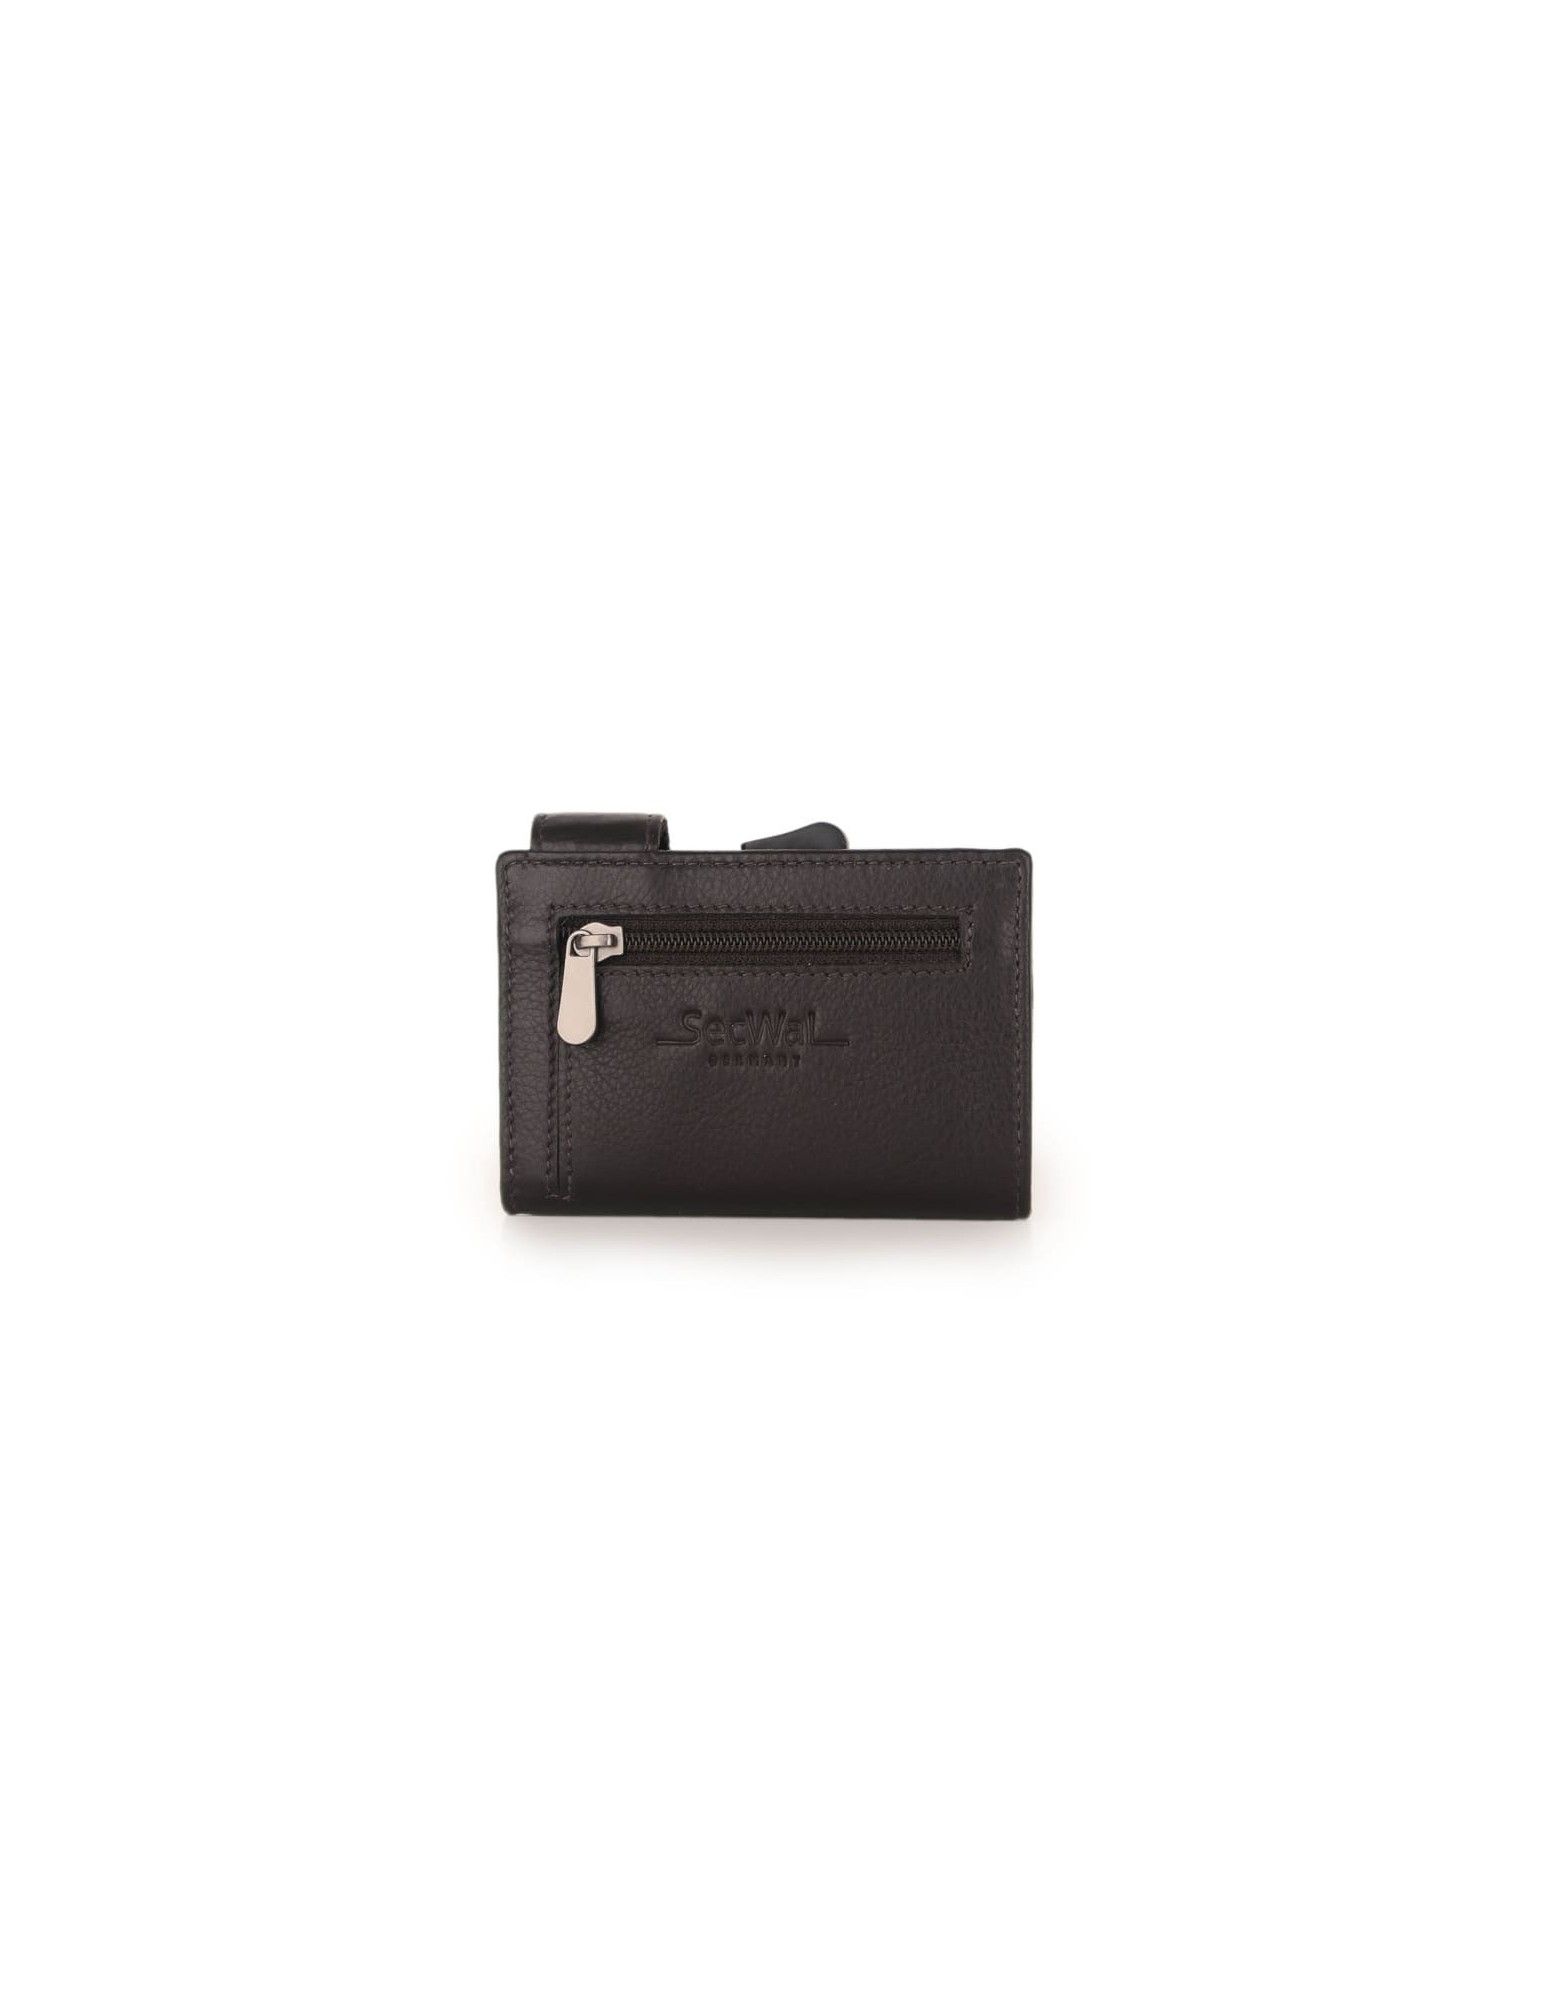 SecWal Card Case RV Leather dark Brown